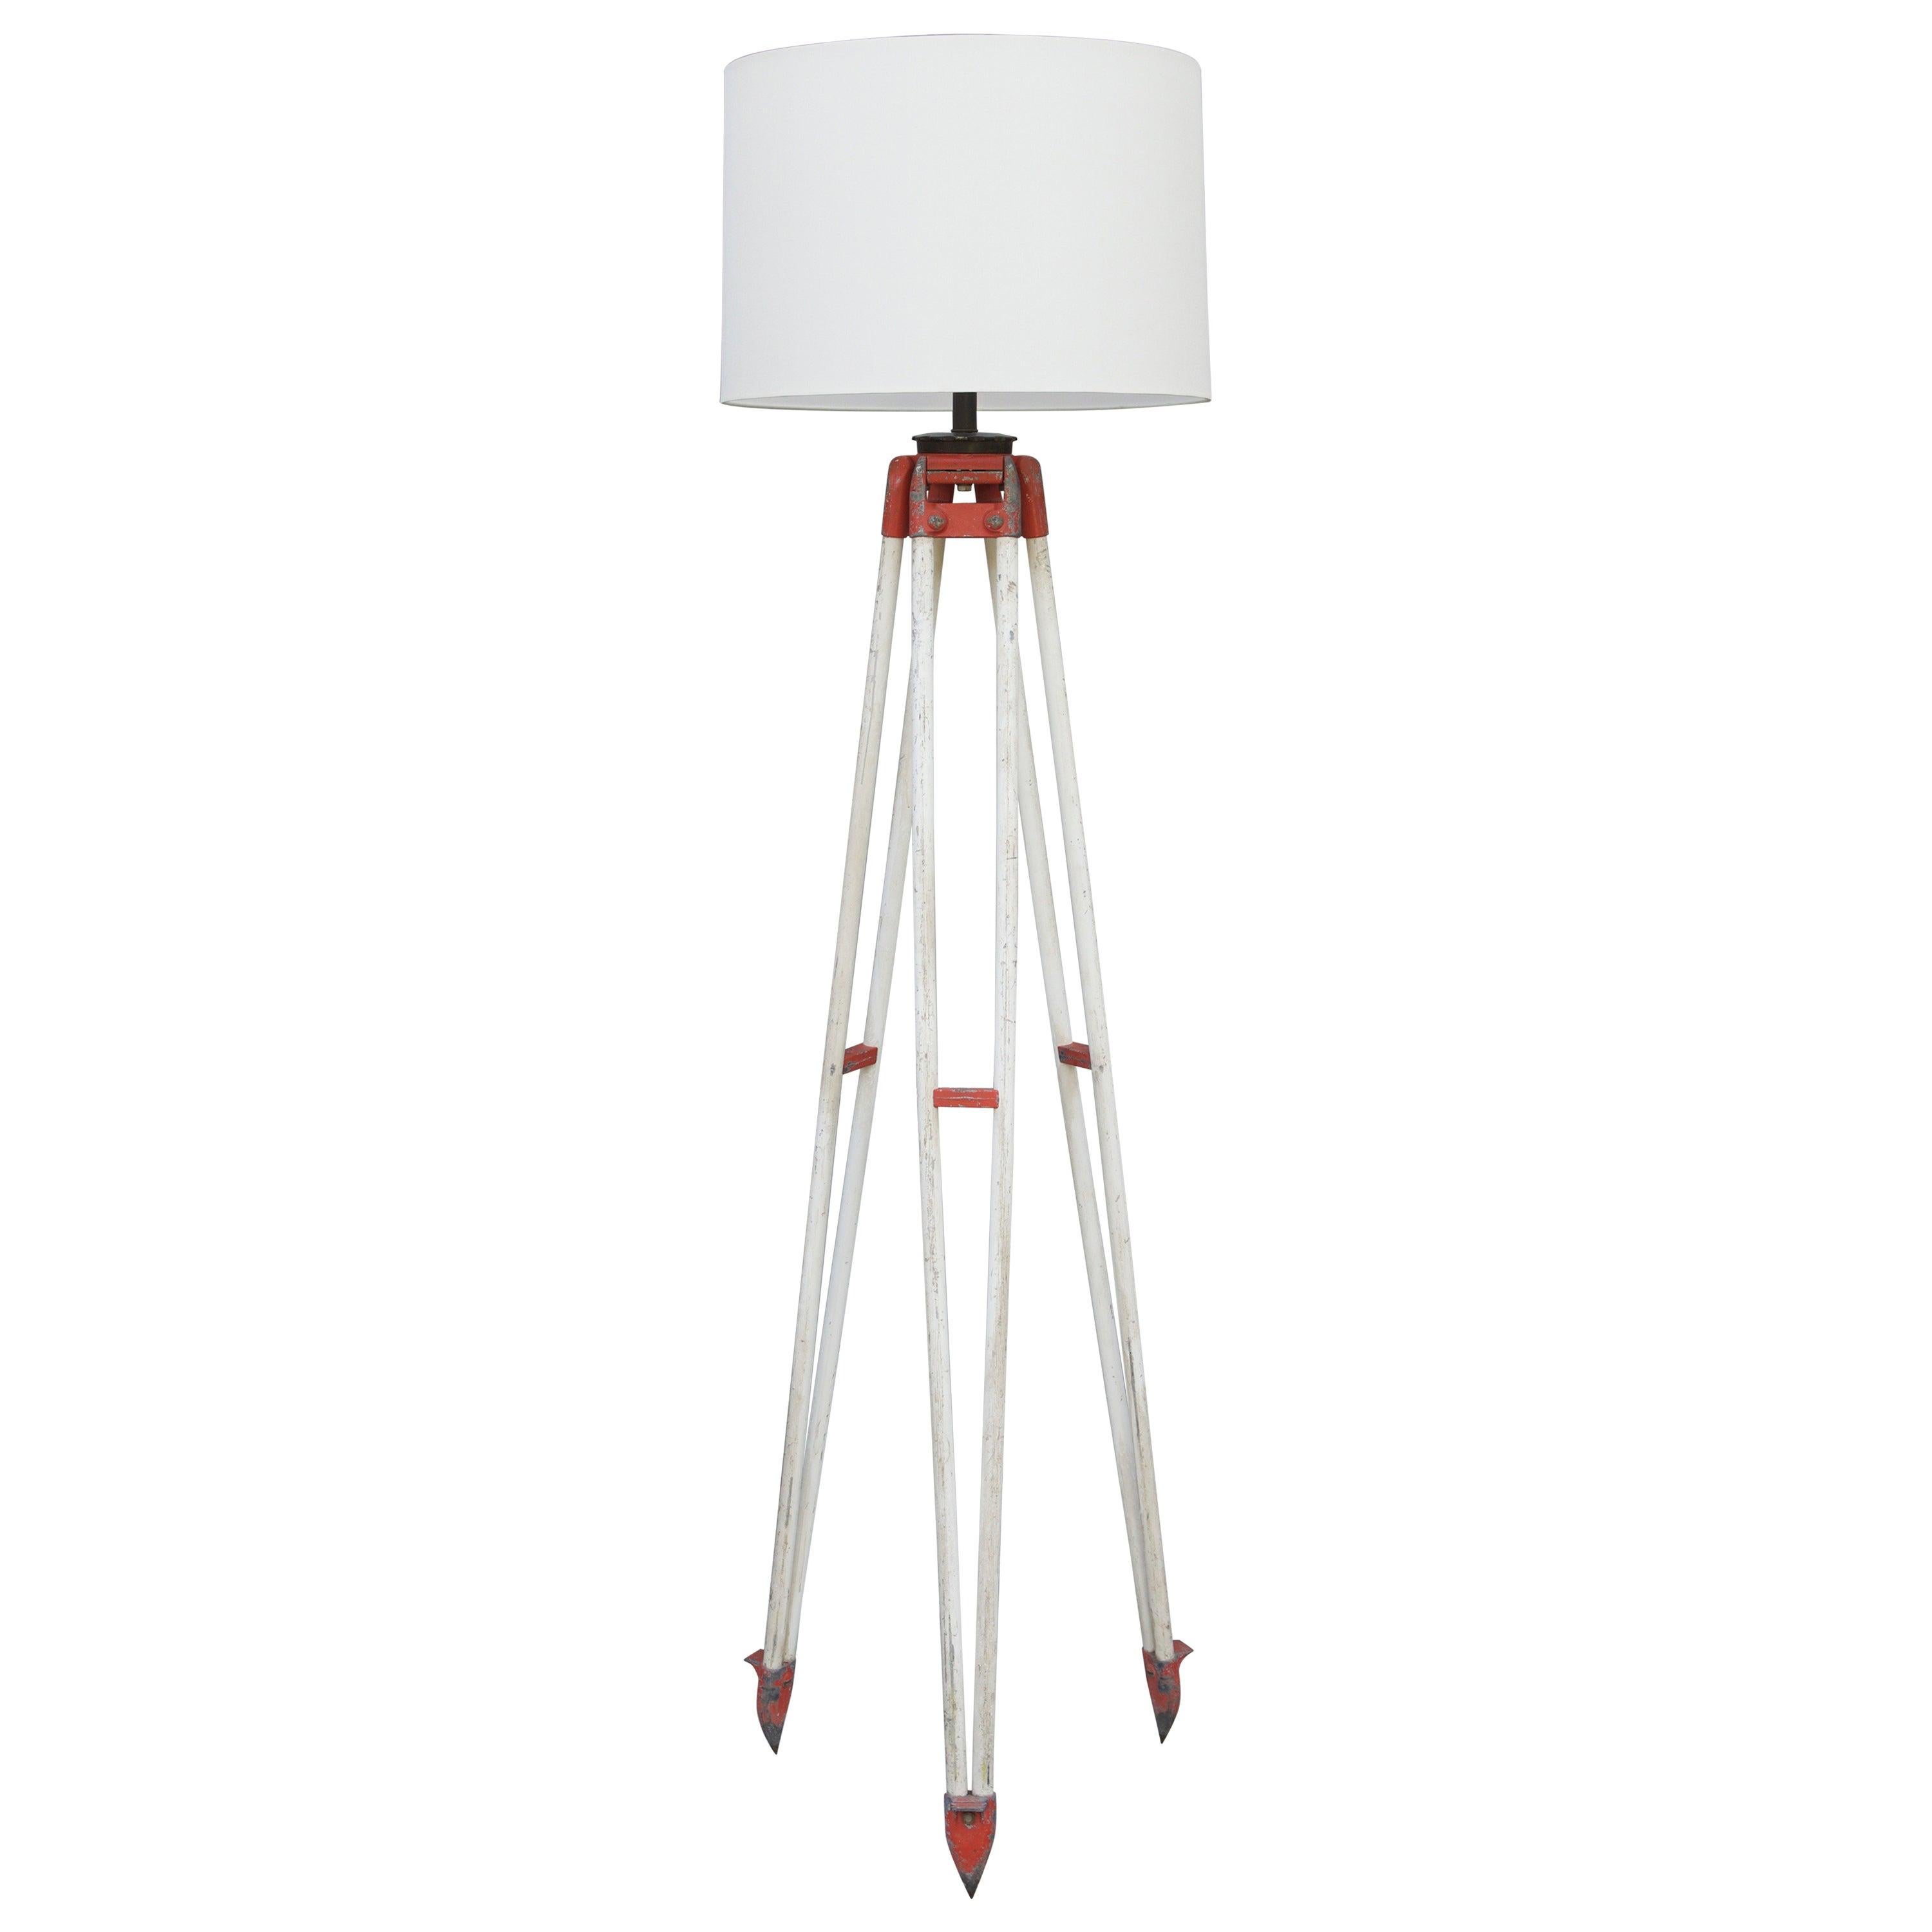 Tall Industrial Surveyor Tripod Floor Lamp For Sale